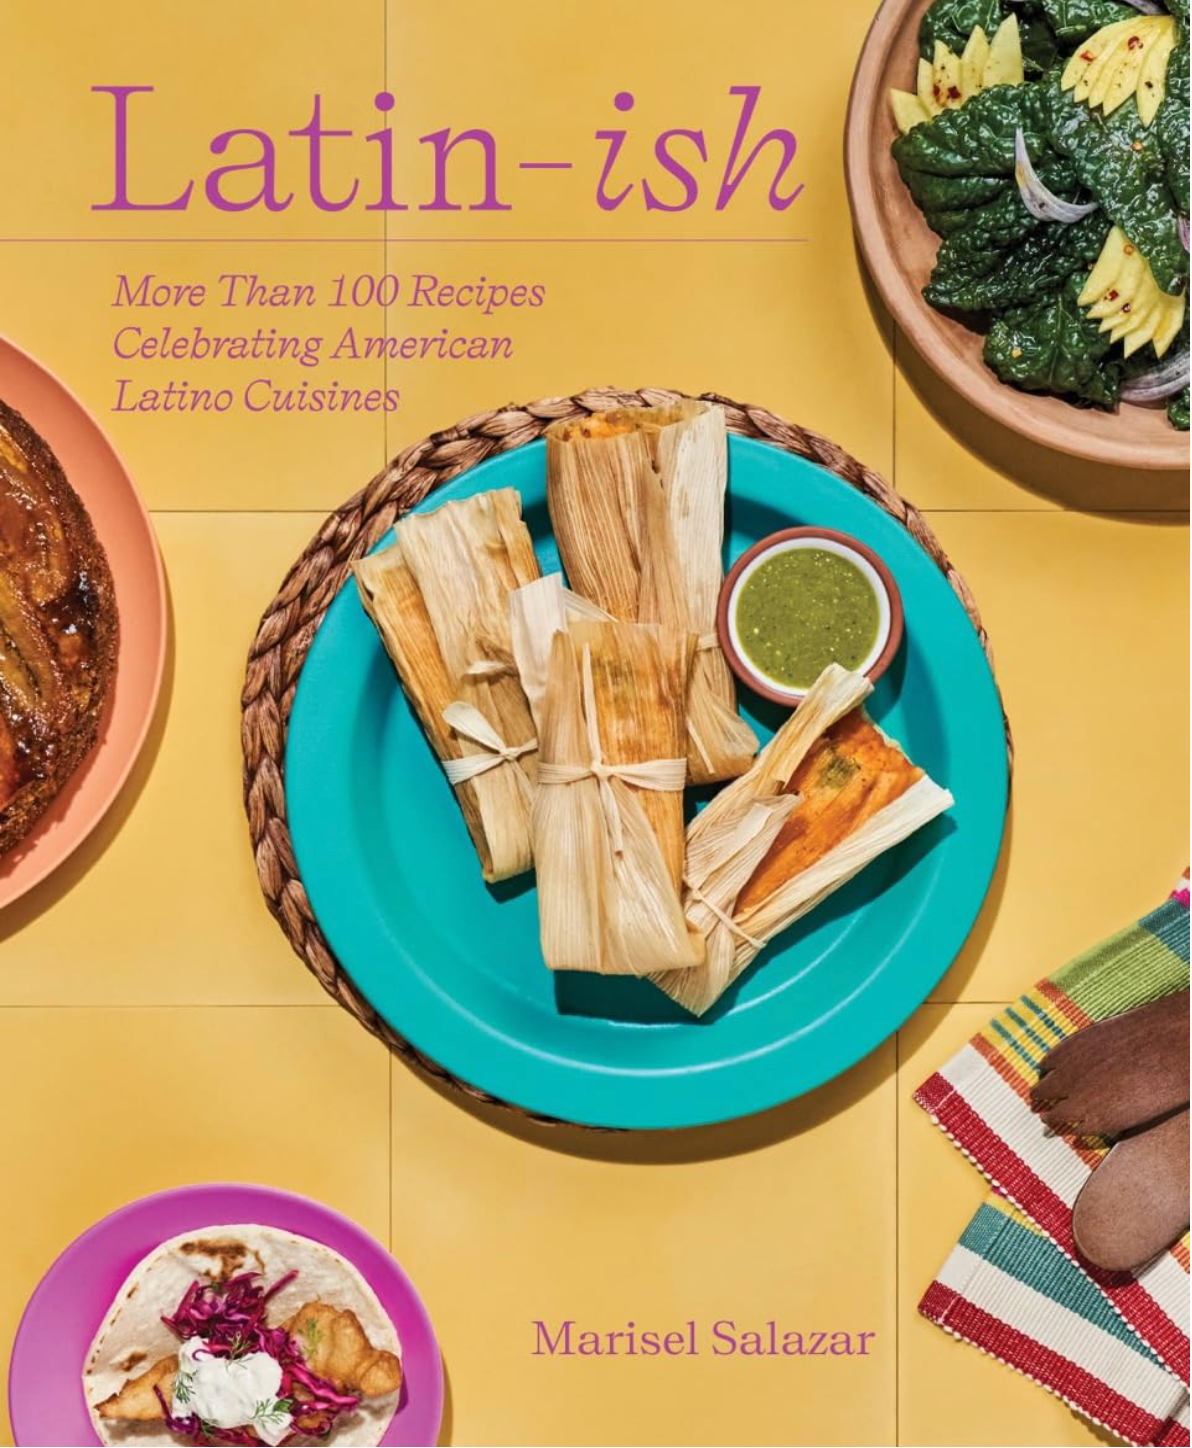 *Pre-order* Latin-Ish: More Than 100 Recipes Celebrating American Latino Cuisines (Marisel Salazar)